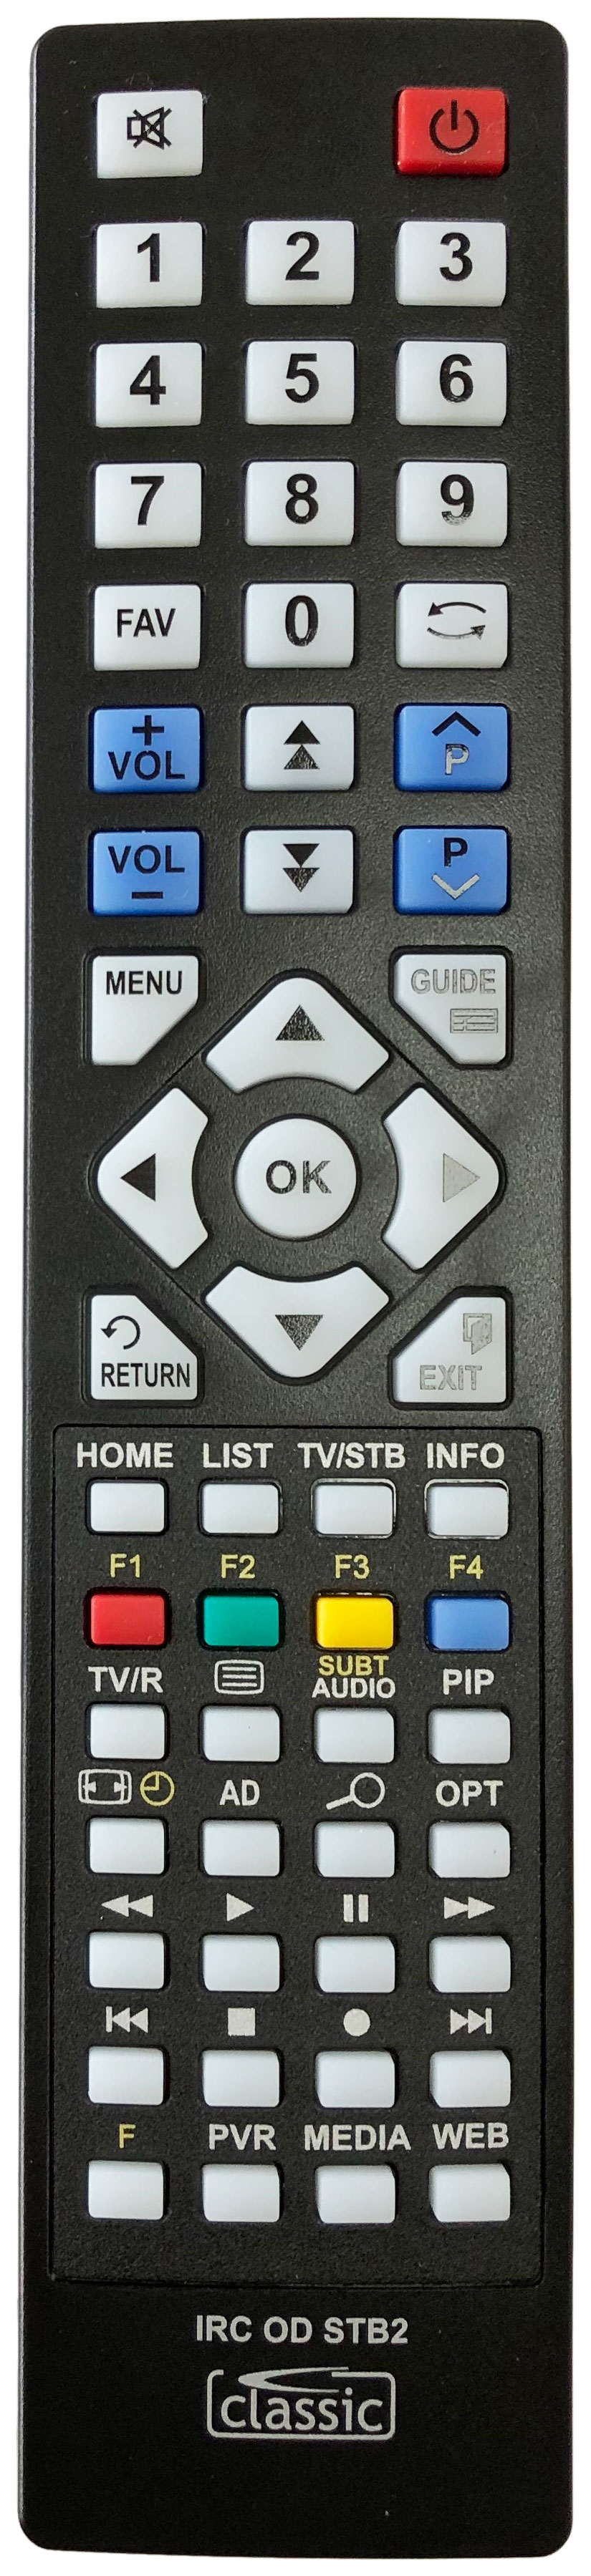 SAGEM DTR67500TECOUK Remote Control